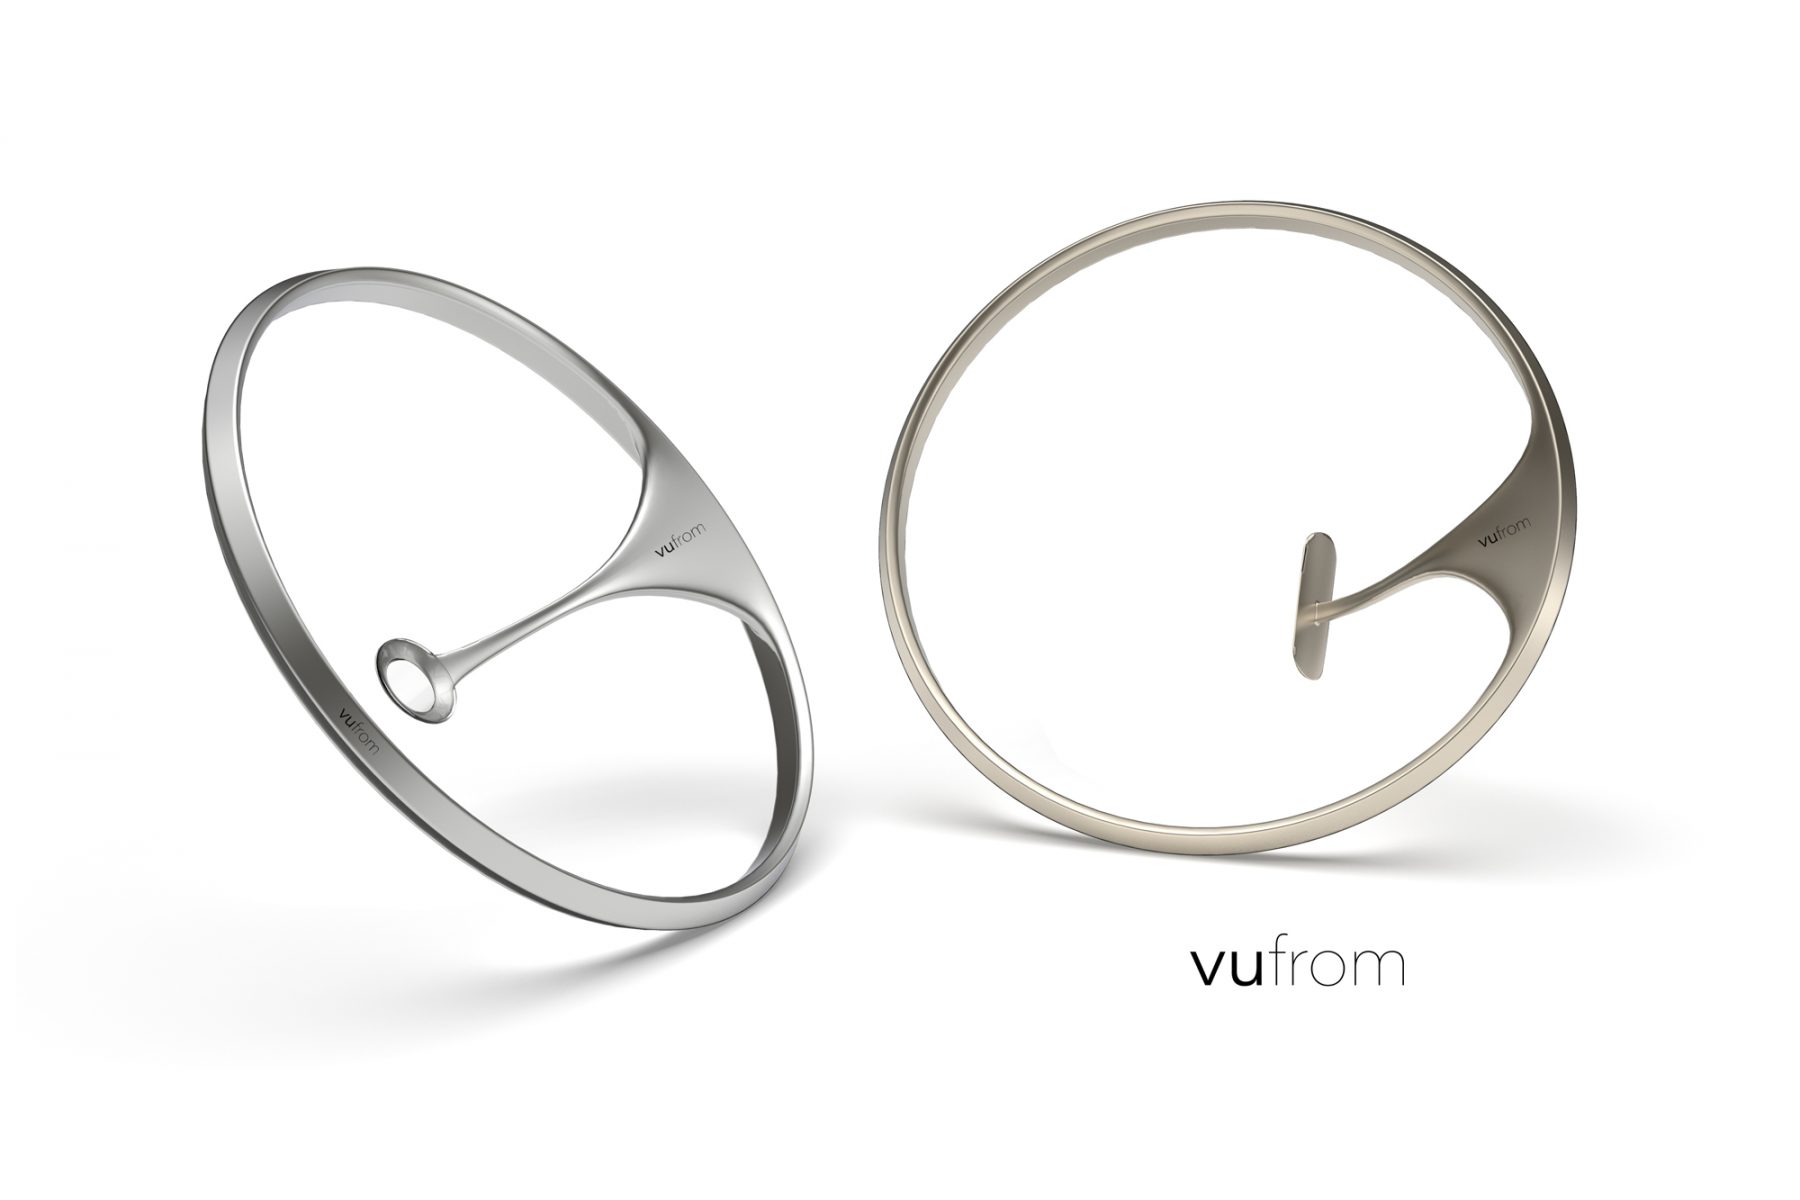 Vufrom designed by Julien Bonzom